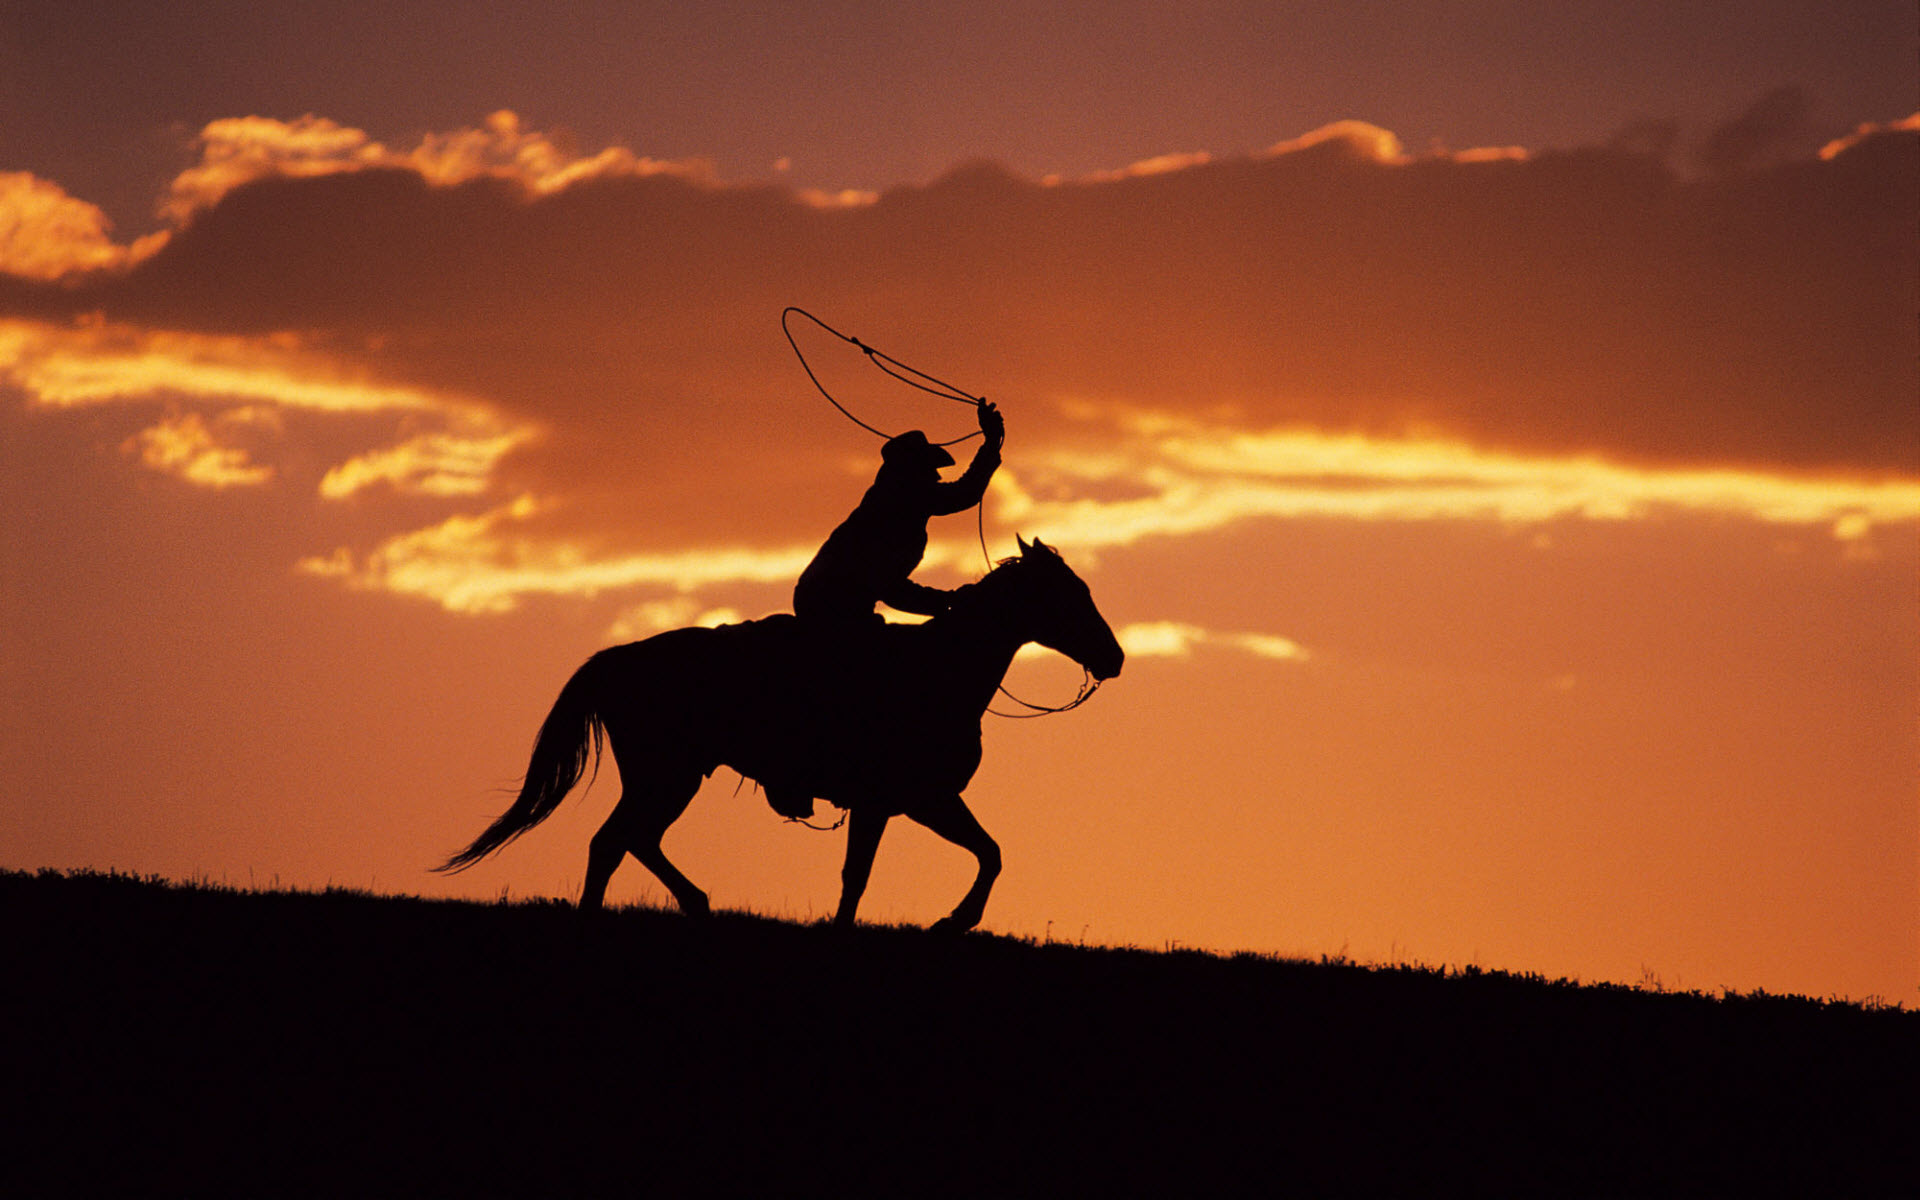 western_cowboy_at_sunset-wide.jpg